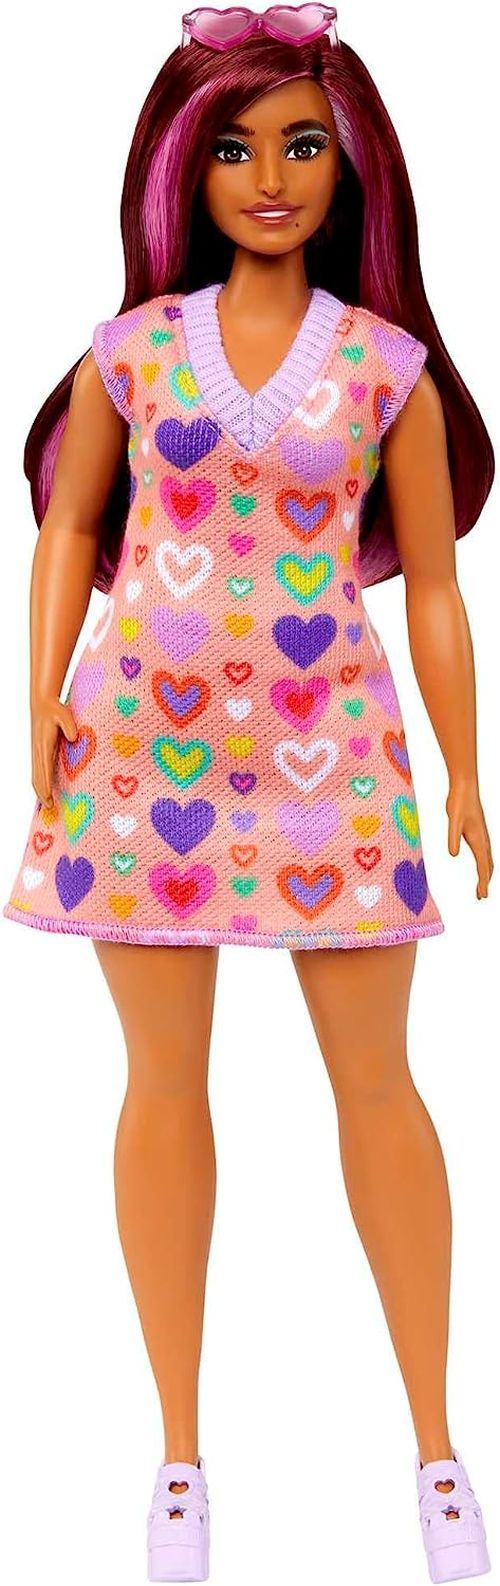 MATTEL Barbie In A Heart Colored Dress - 